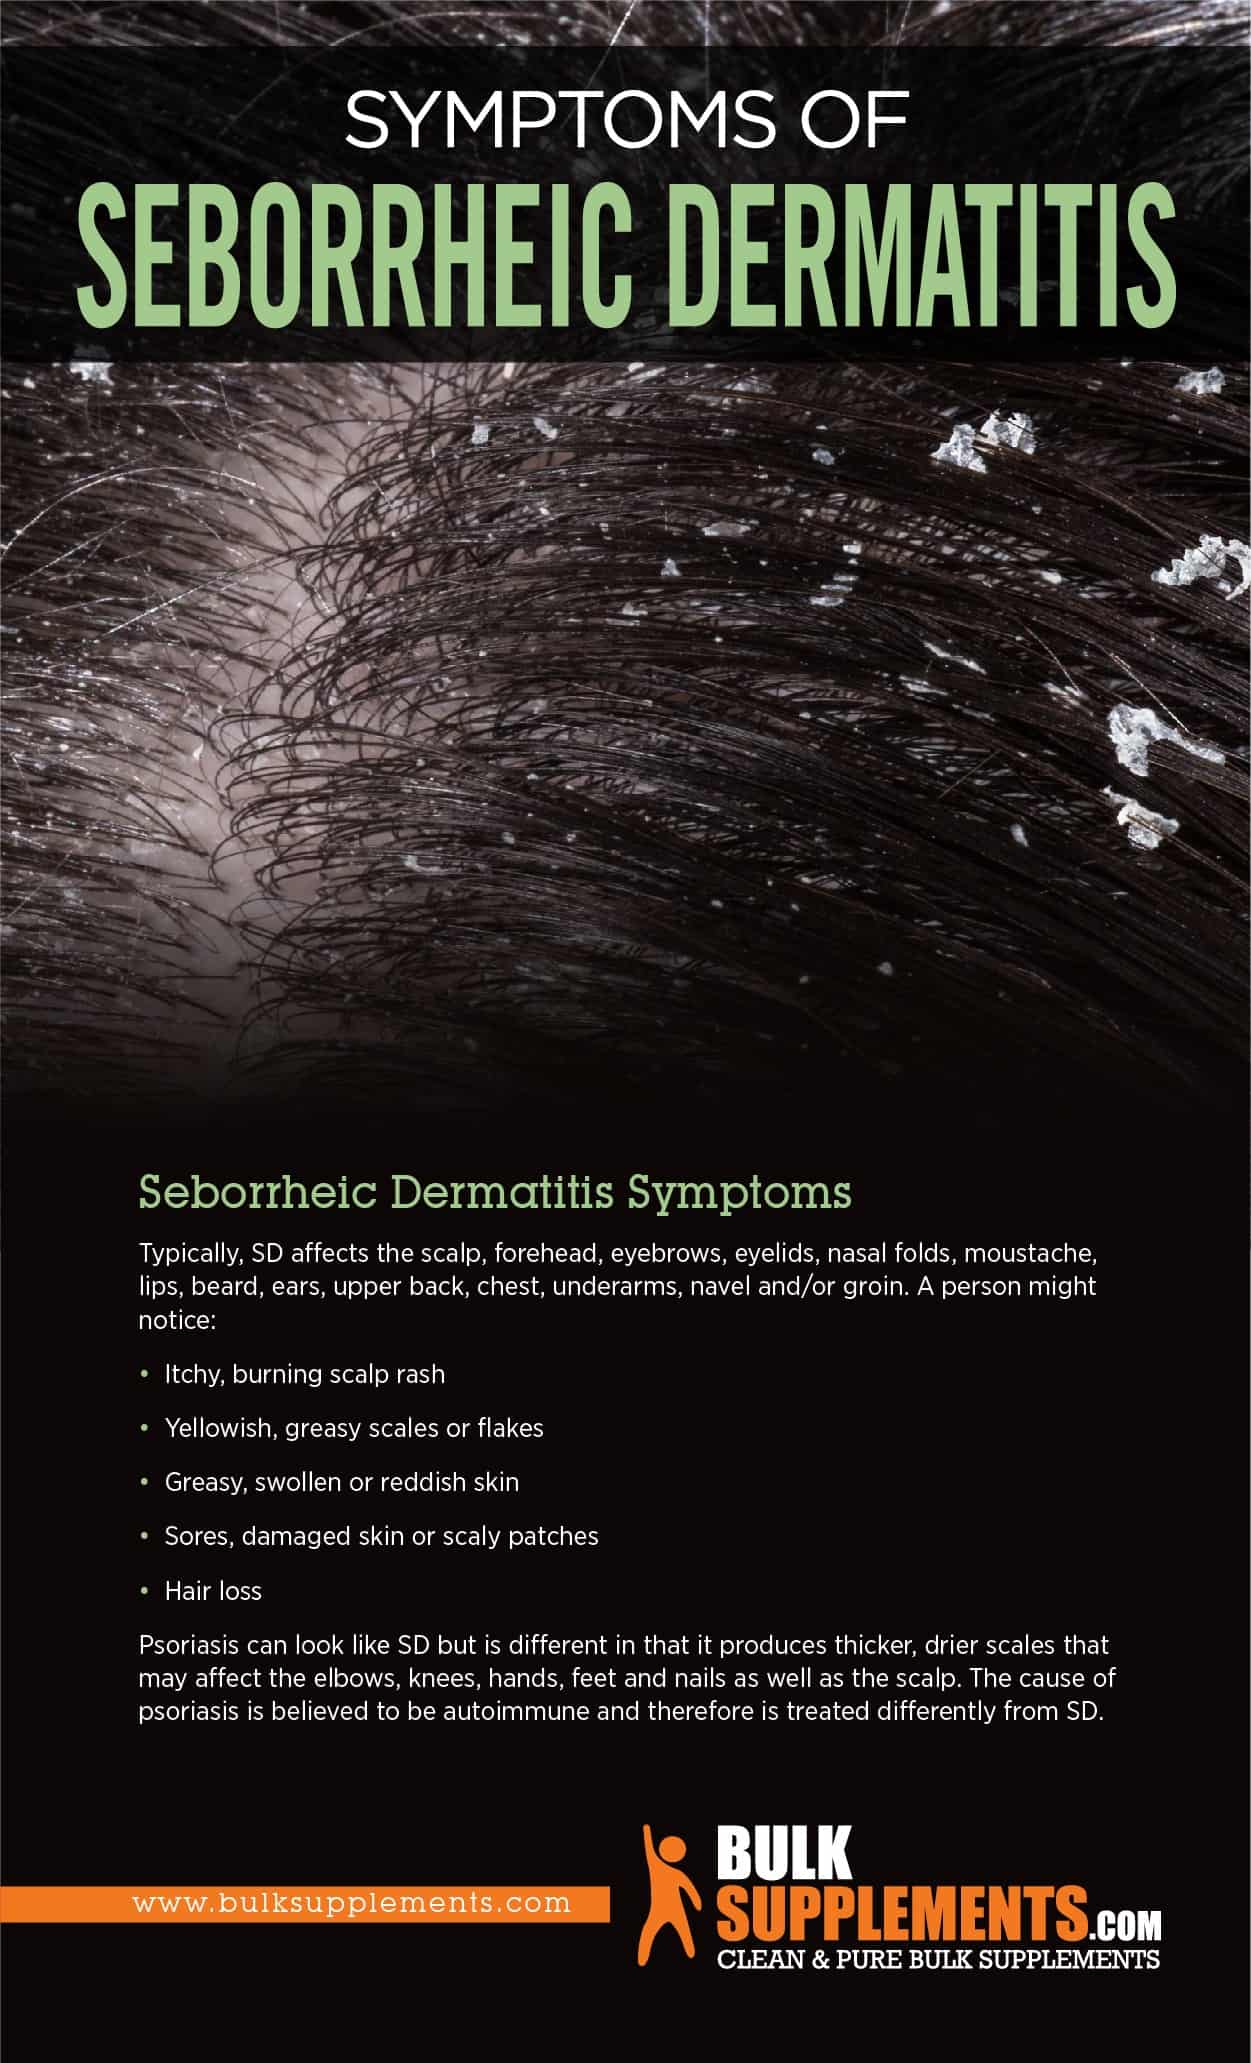 Symptoms of Seborrheic Dermatitis